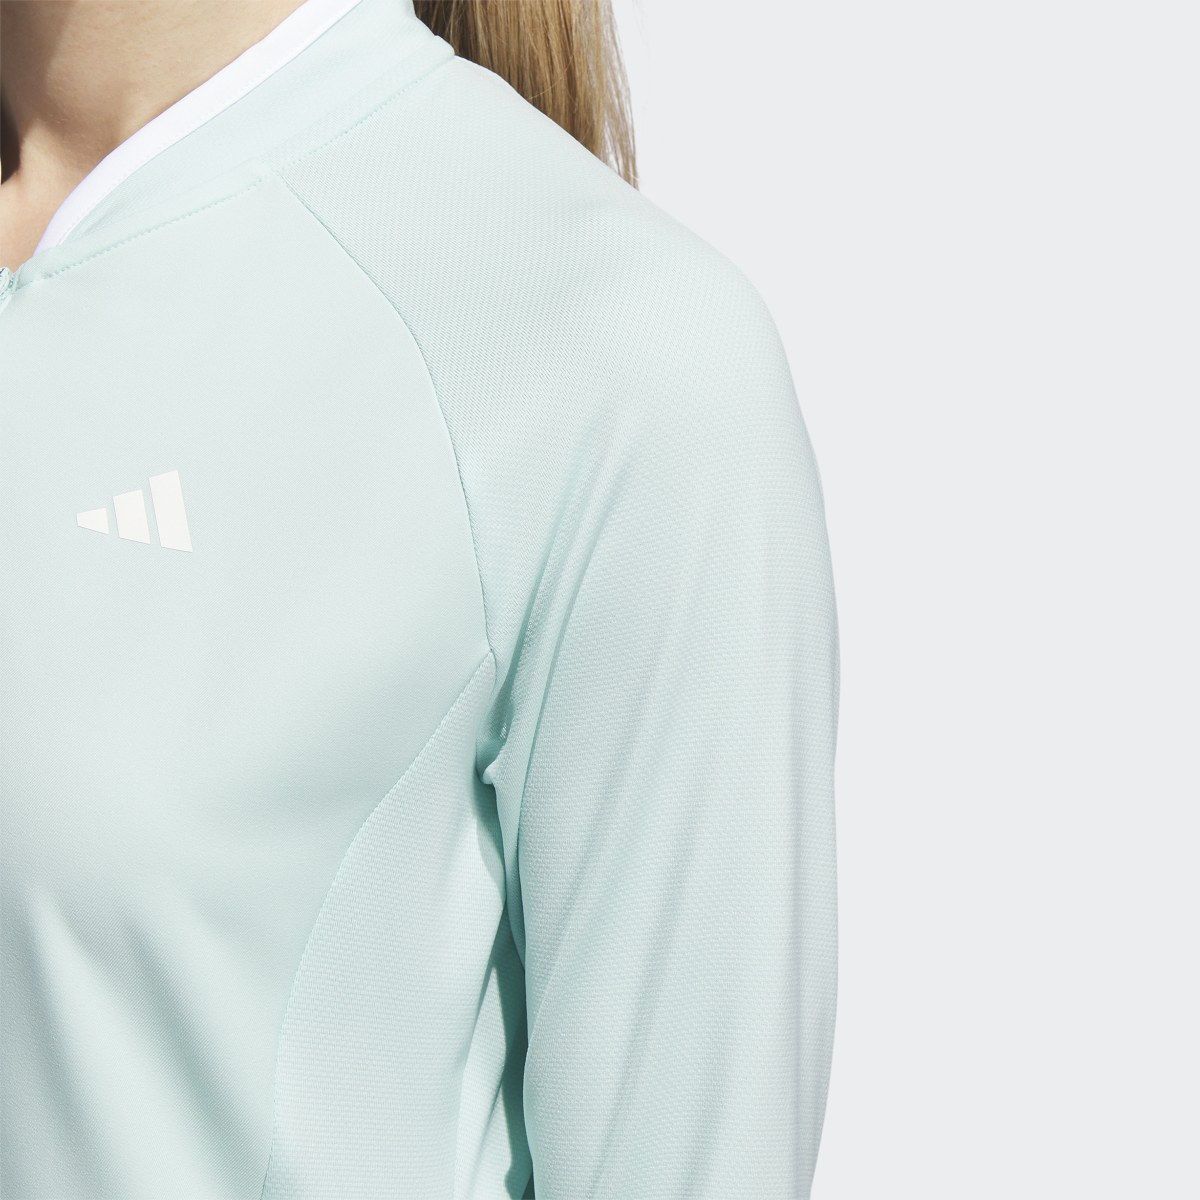 Adidas Long Sleeve Golf Dress. 8